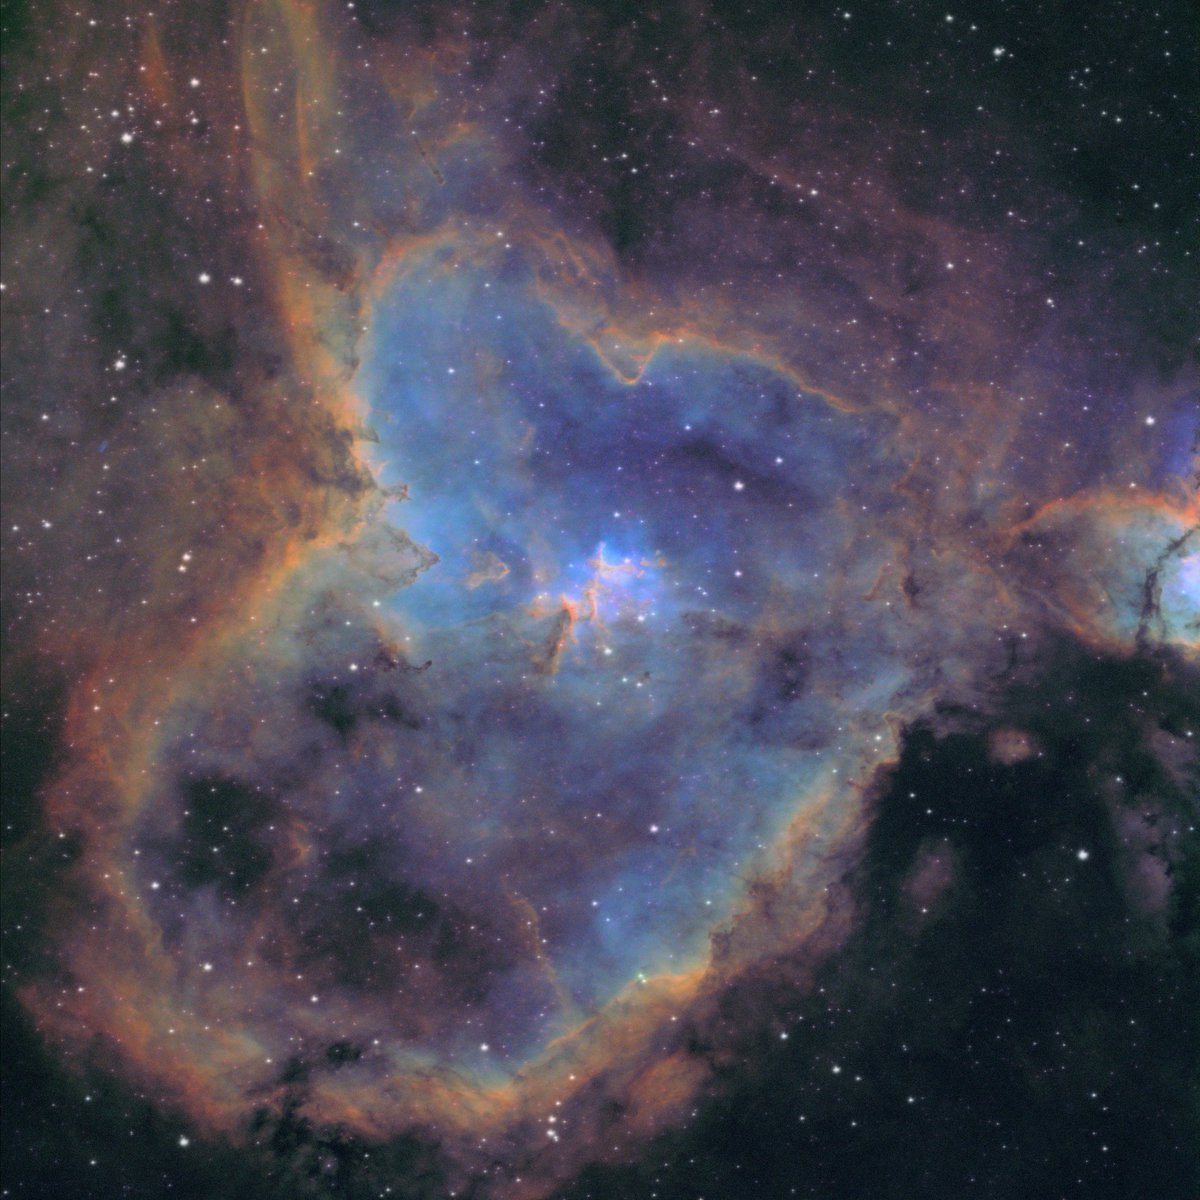 From my telescope, the #heartnebula

In my driveway #ASI2600MMPro #williamoptics #astrophotography #astrofotografia #space #astronomy #stars #deepsky #astroaddicted #stargazing #sky #deepspace #IC1805